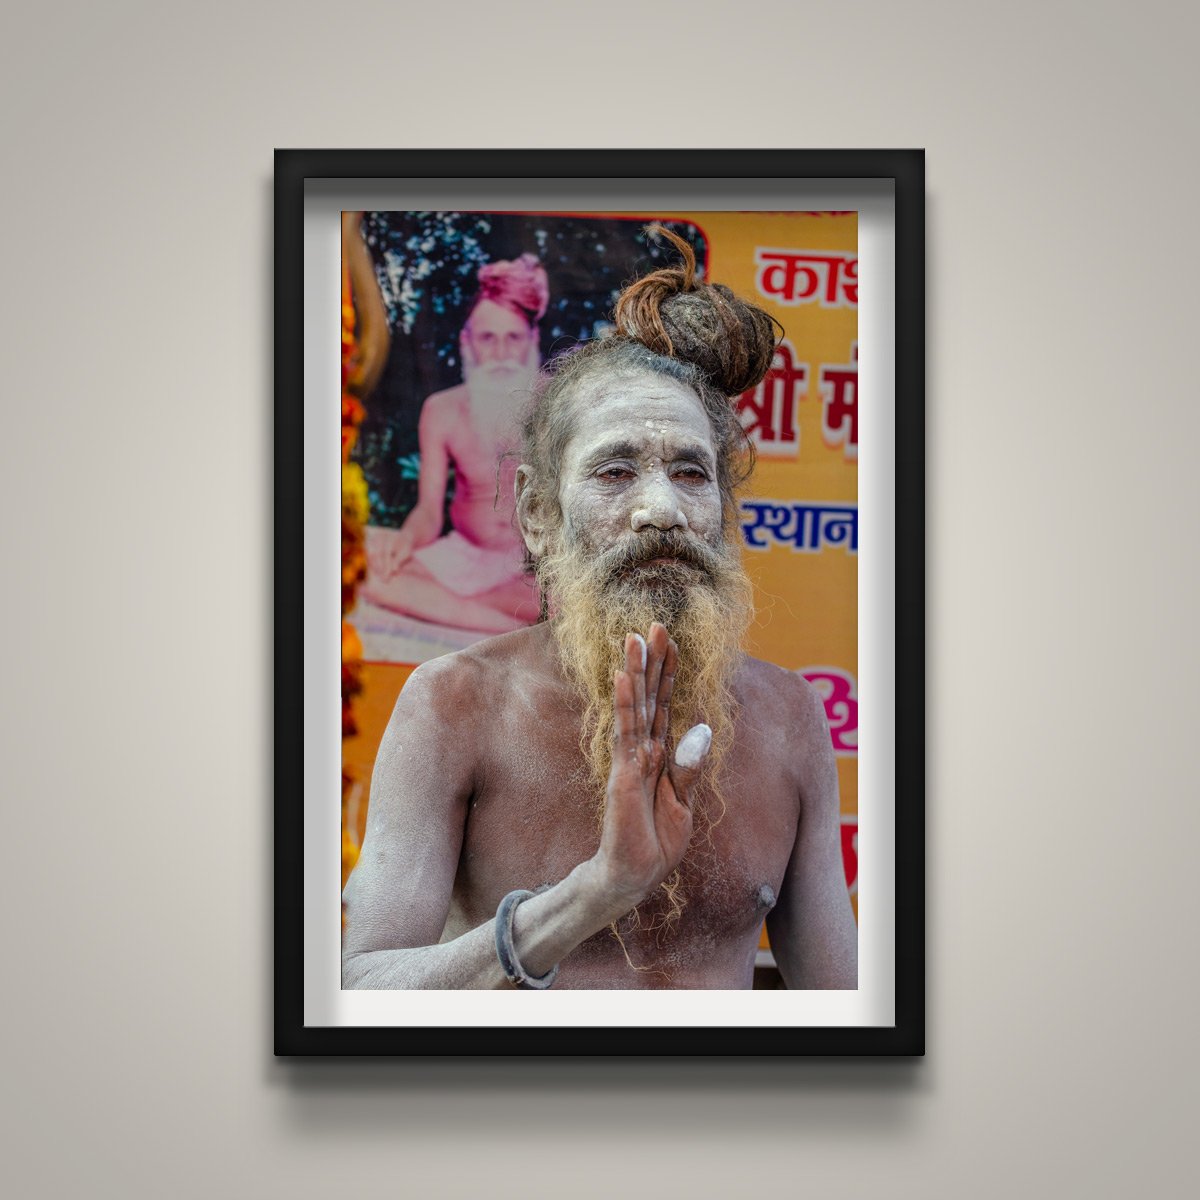 Naga Sadhu with Poster